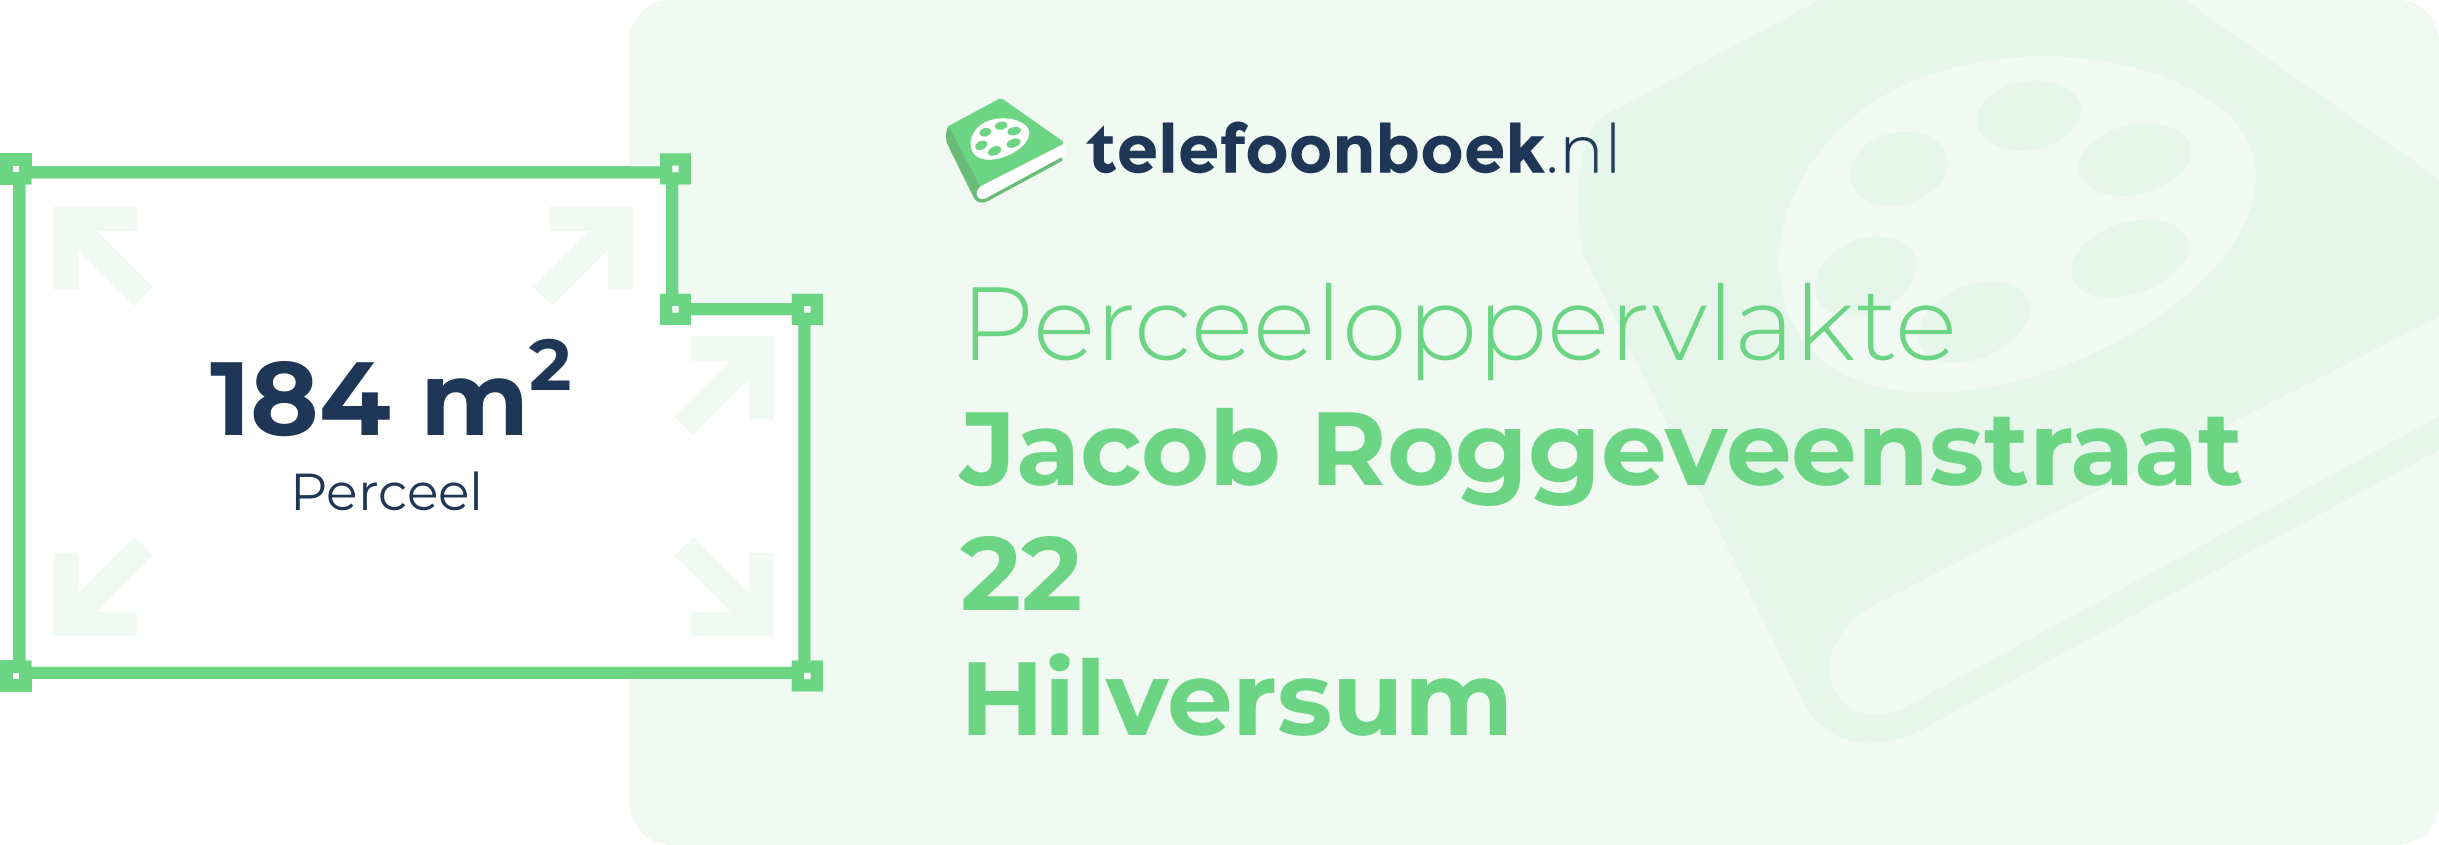 Perceeloppervlakte Jacob Roggeveenstraat 22 Hilversum